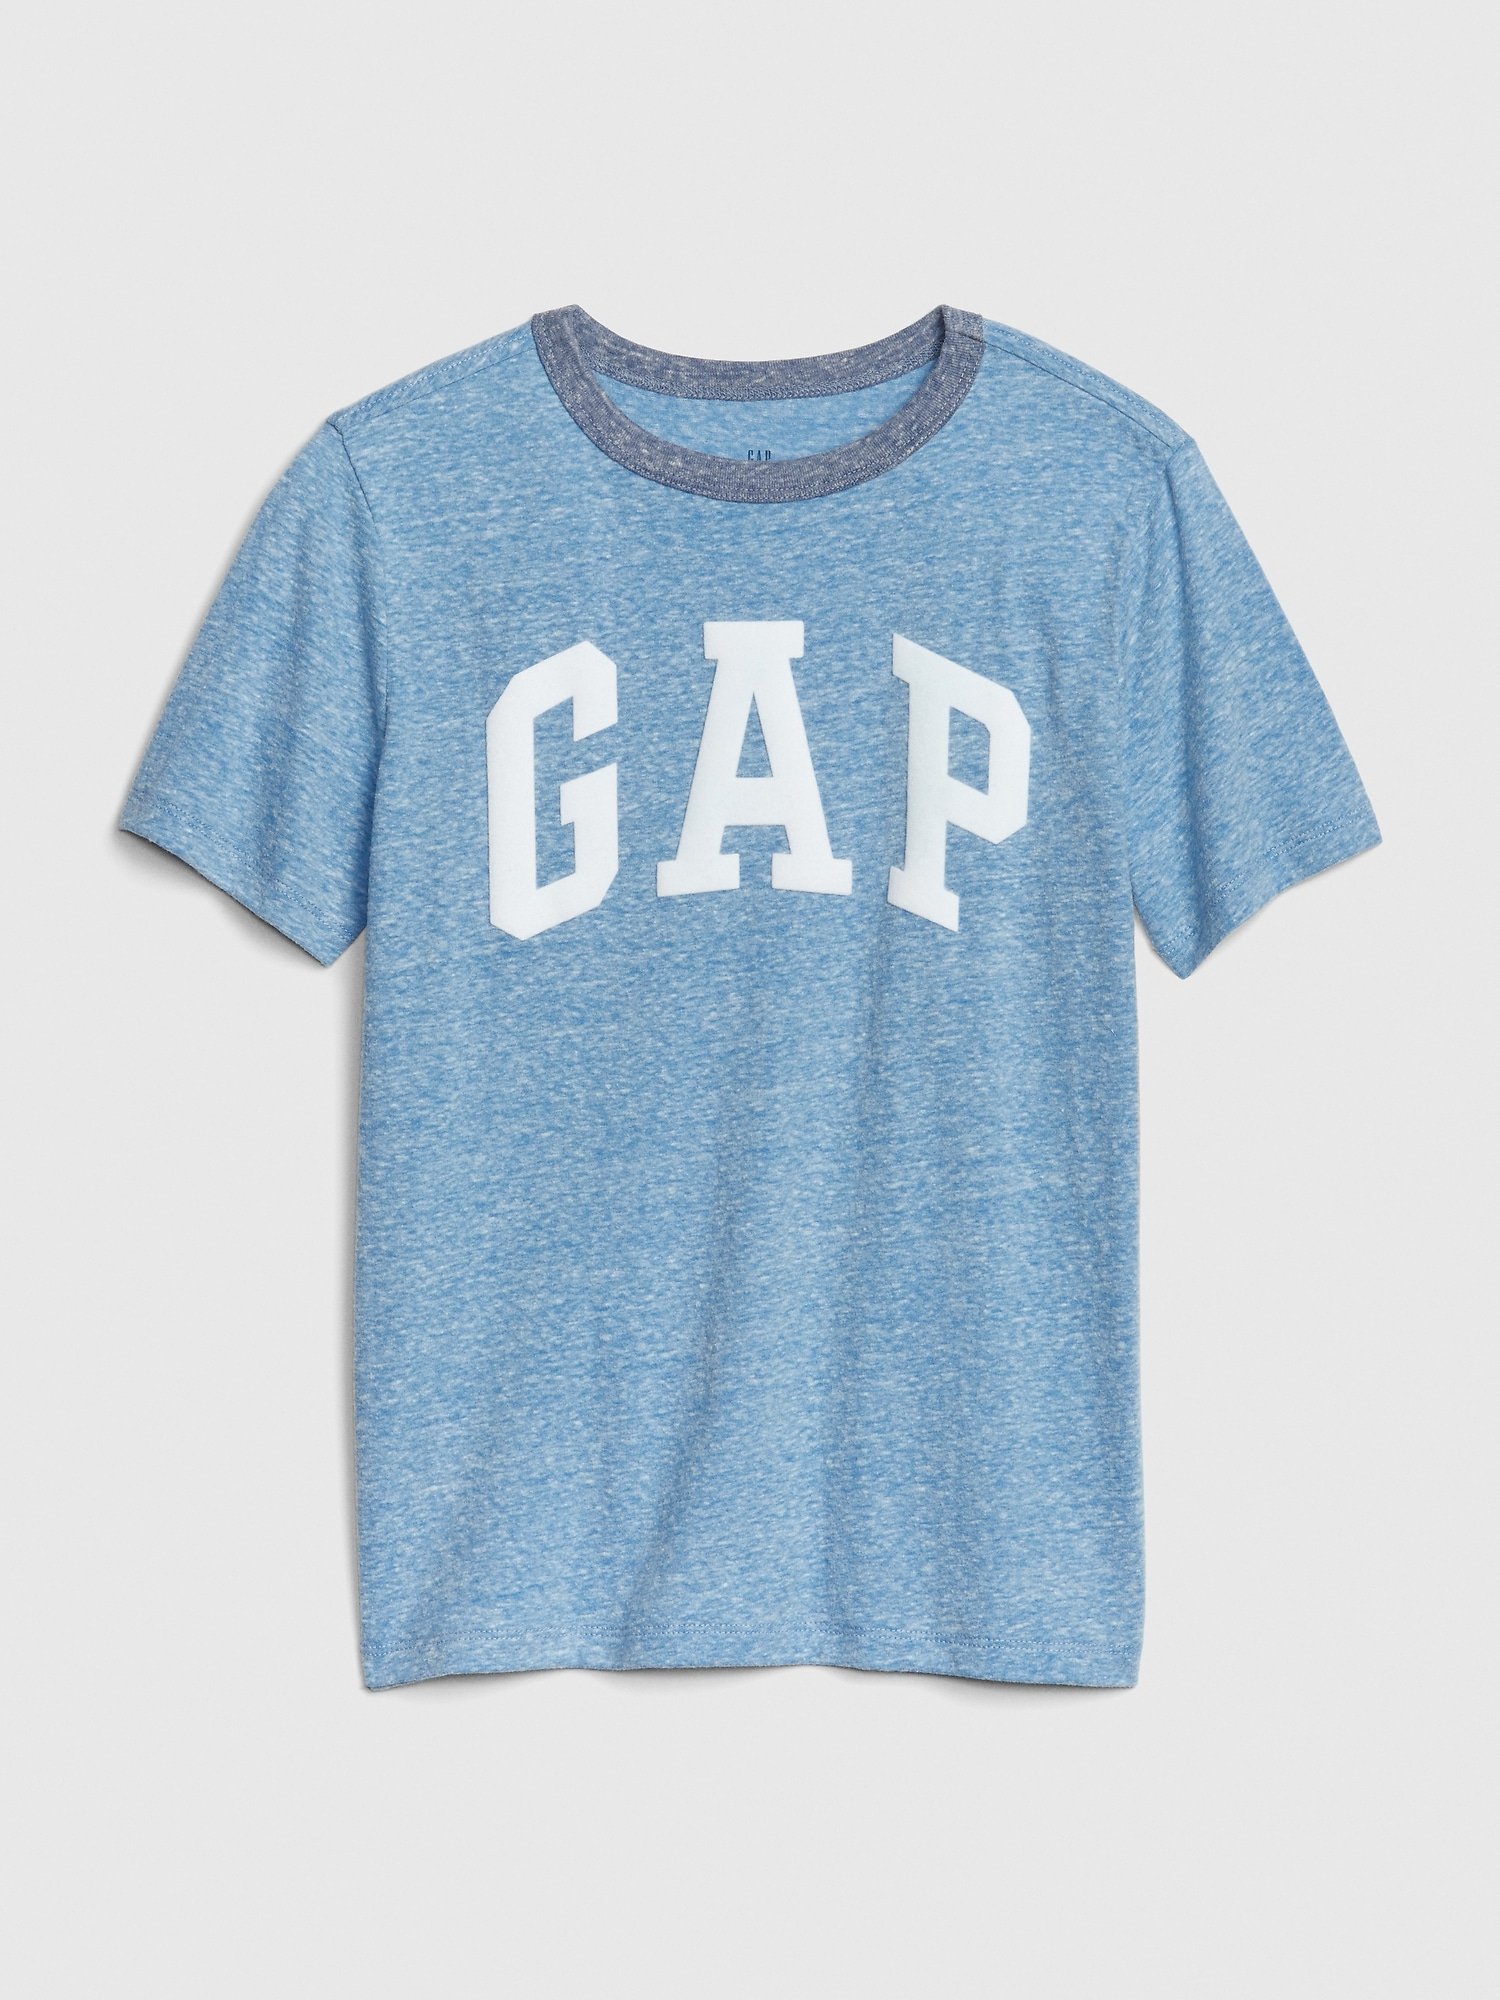 Gap Logo T-shirt product image